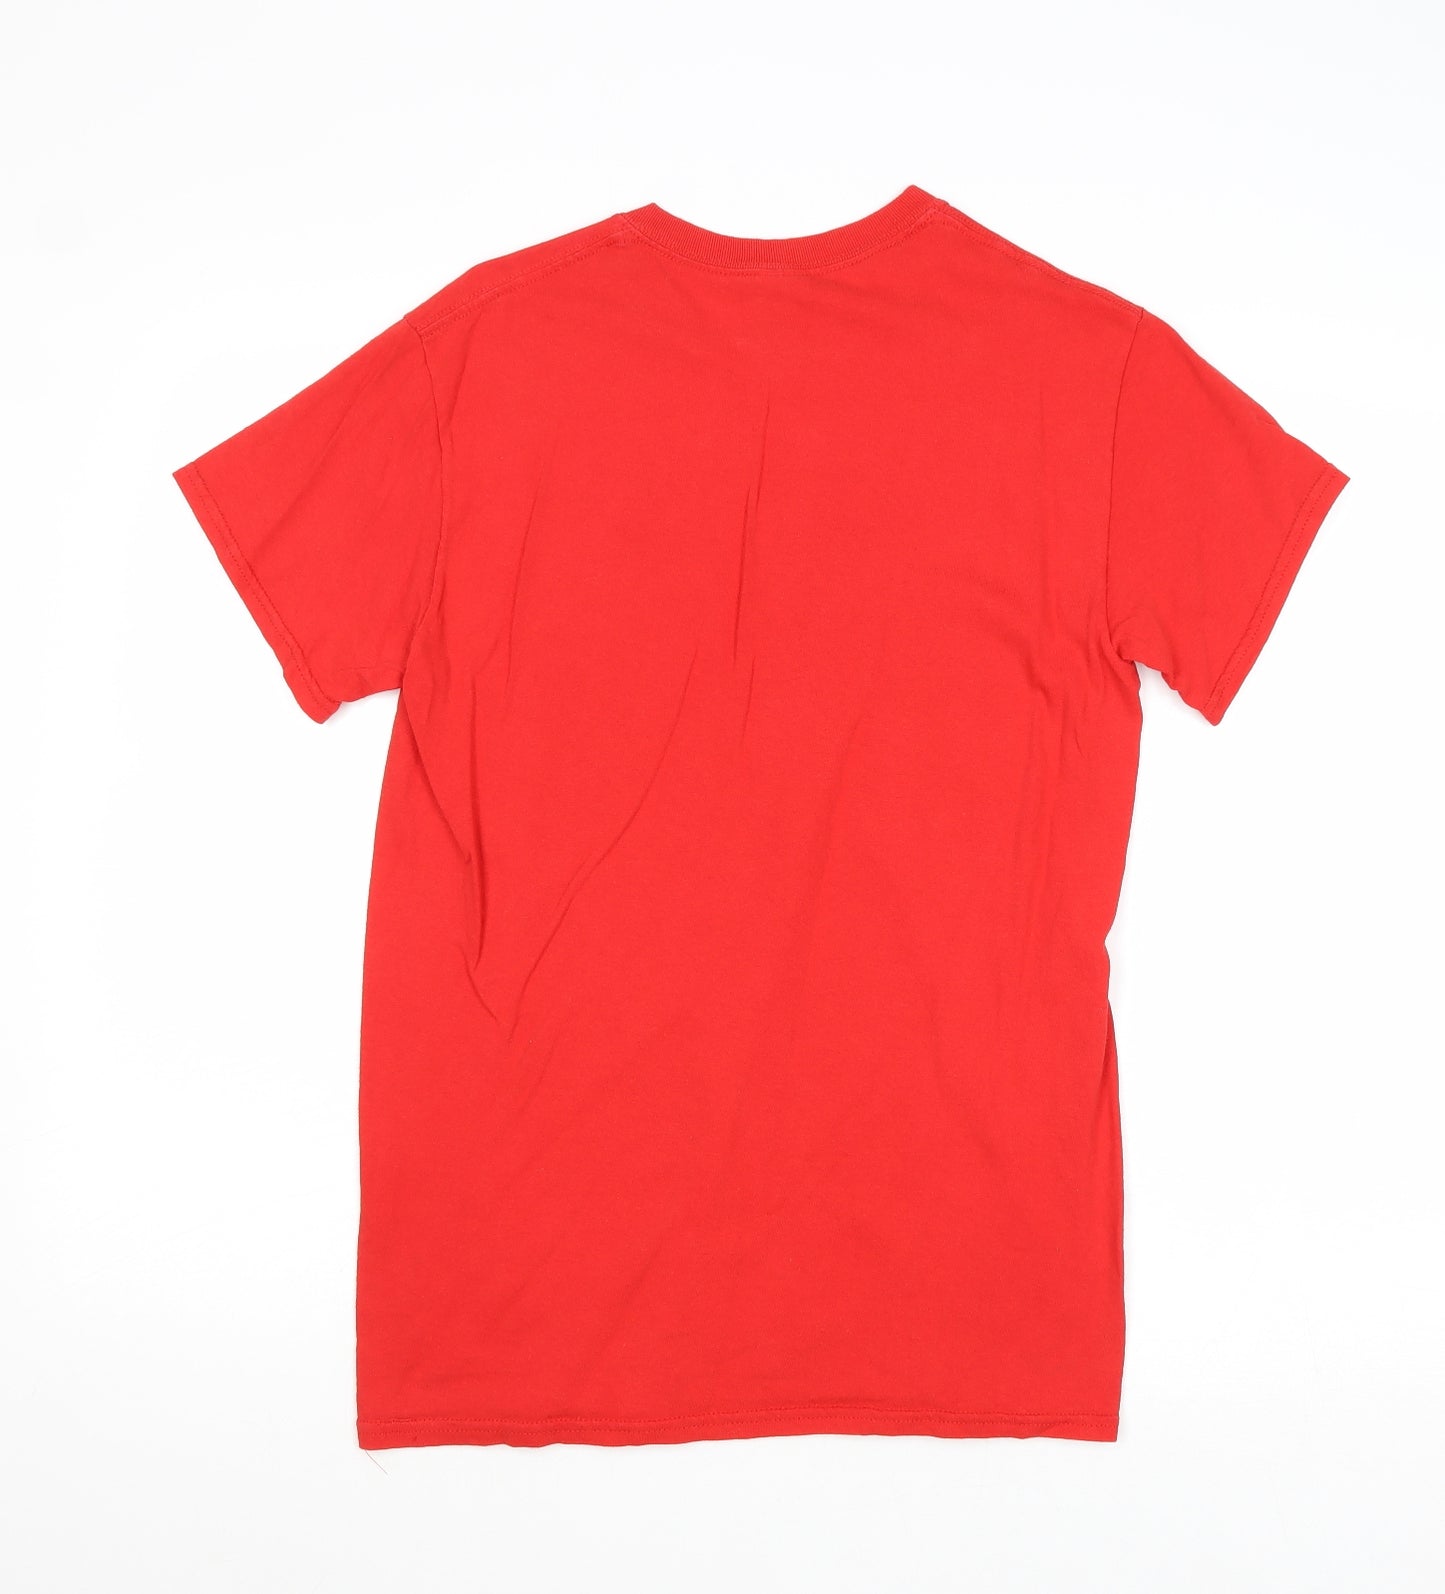 Gildan Mens Red Cotton T-Shirt Size S Round Neck - Awesome Grandpa Slogan